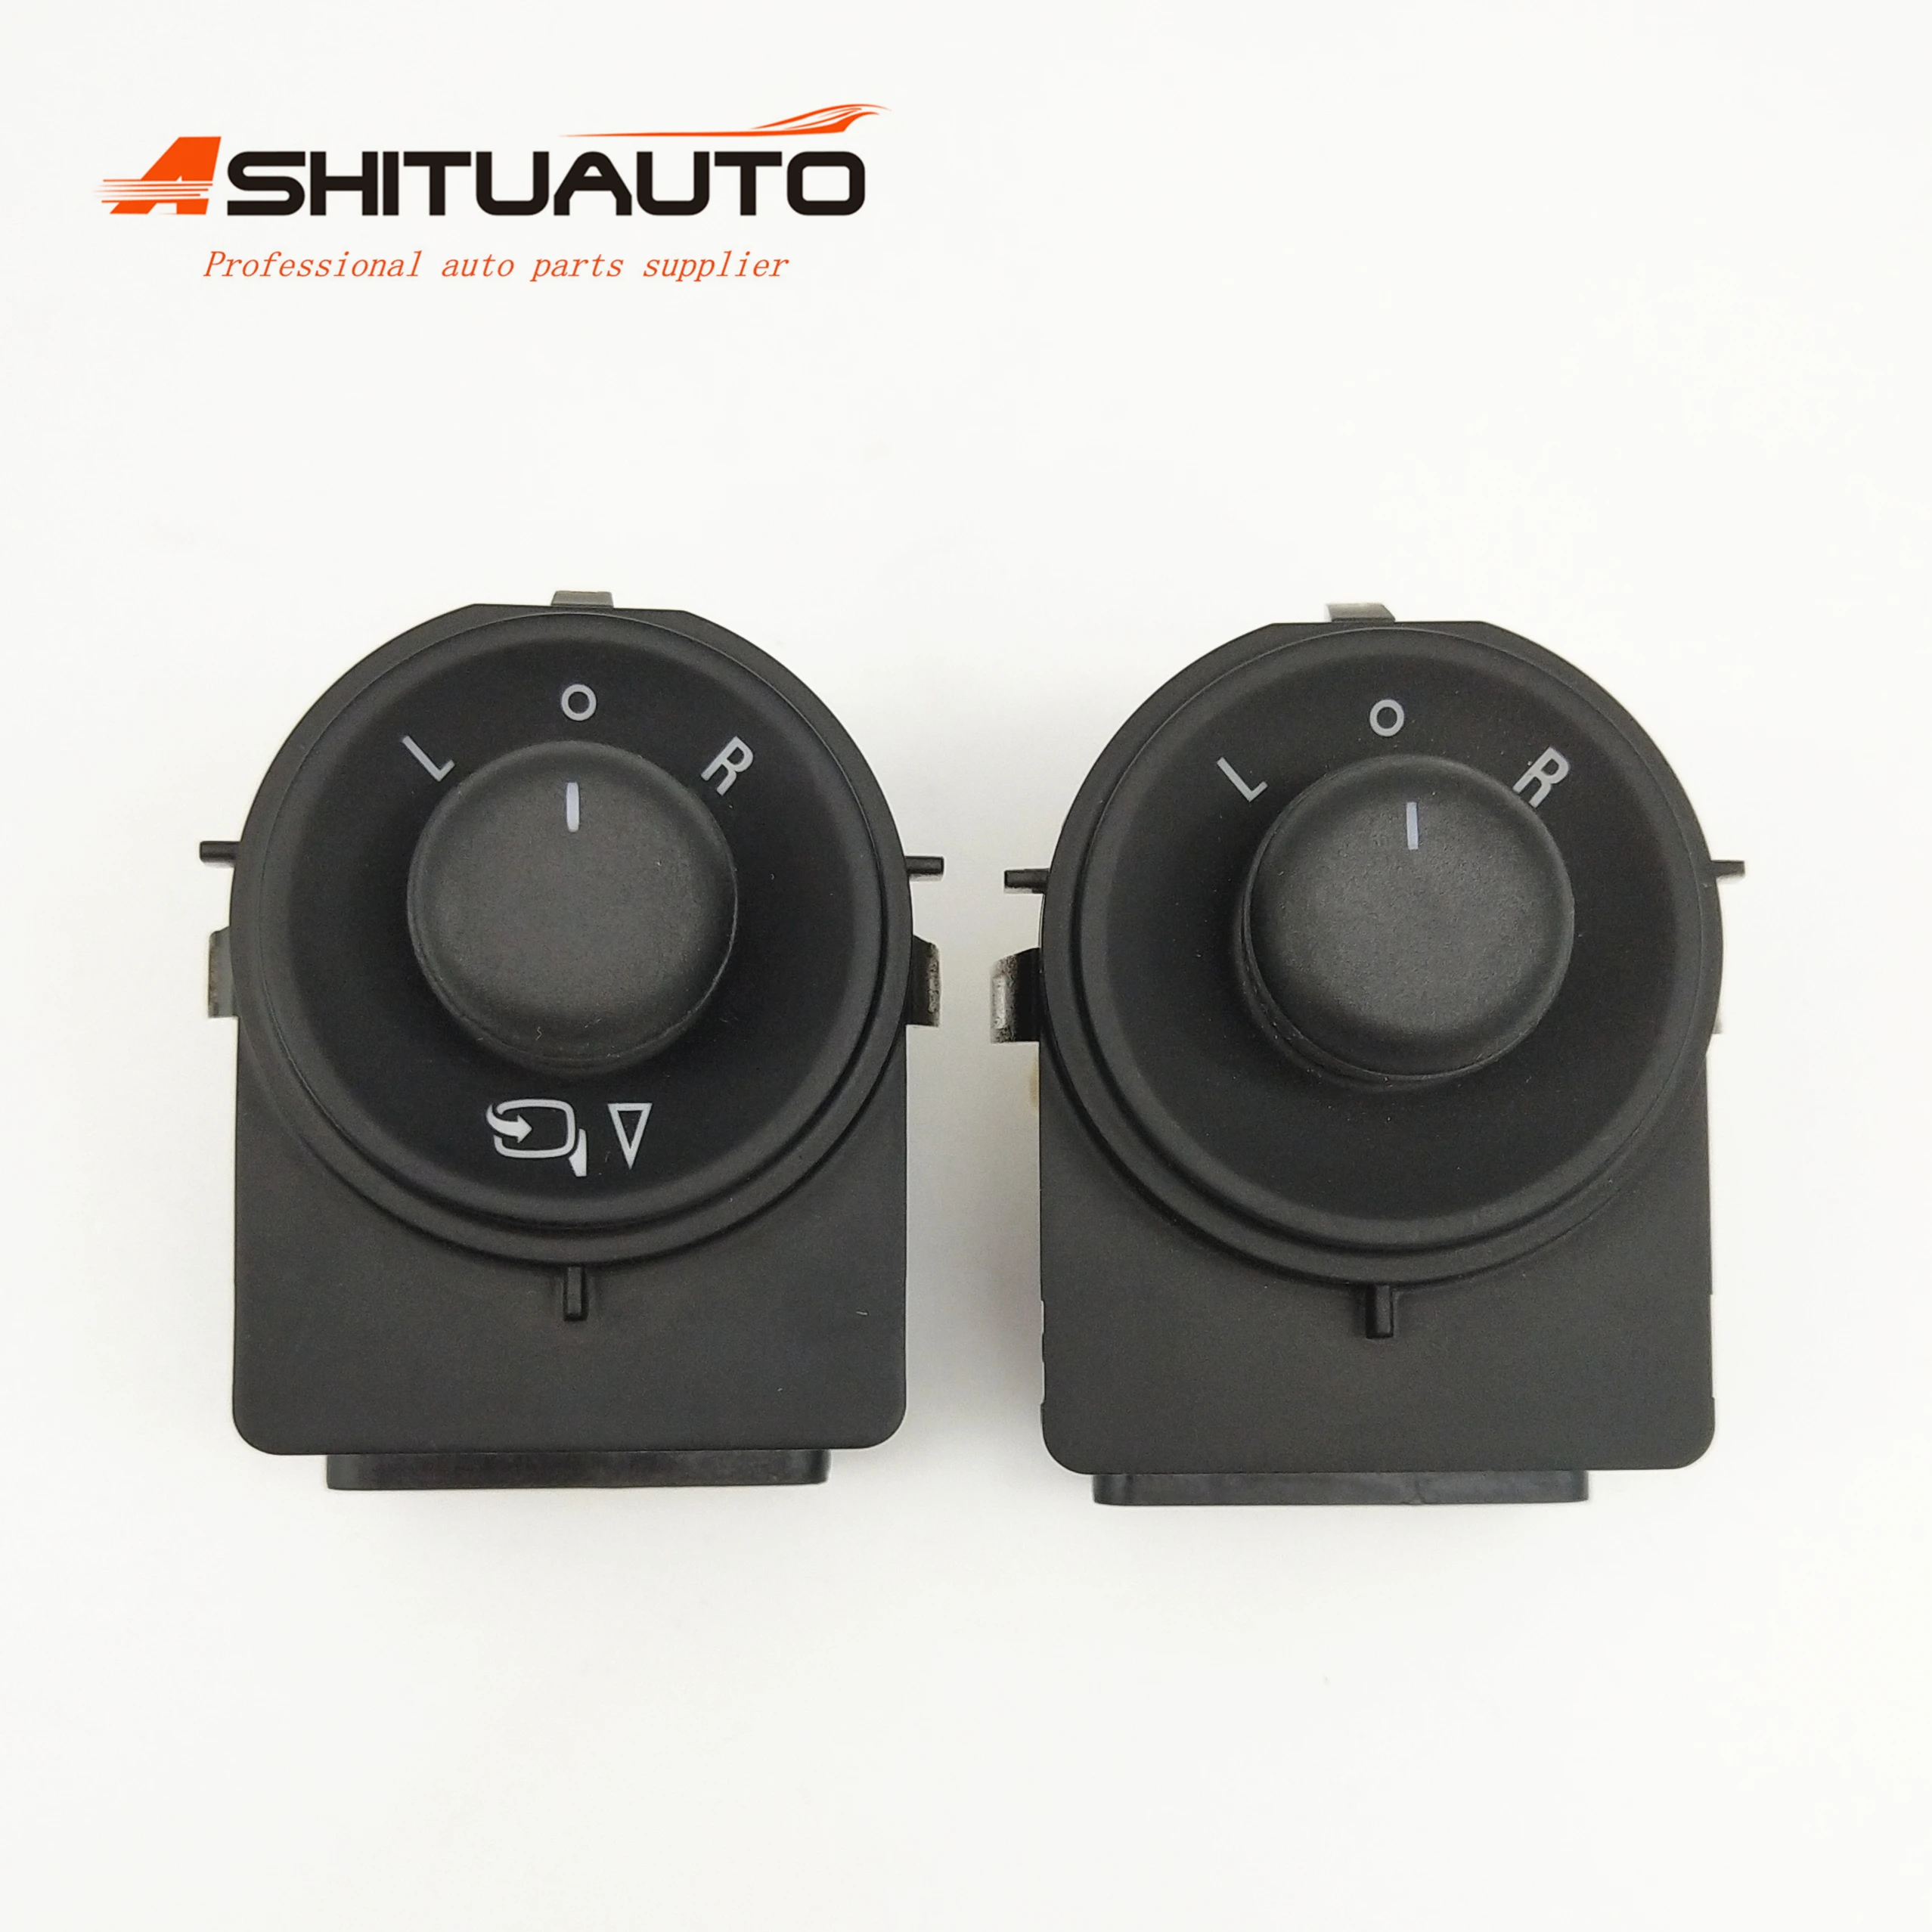 

AshituAuto Electric Rearview Mirror Control Switch For Chevrolet Cruze Malibu Buick Insignia LaCrosse OEM# 13271780 13272182